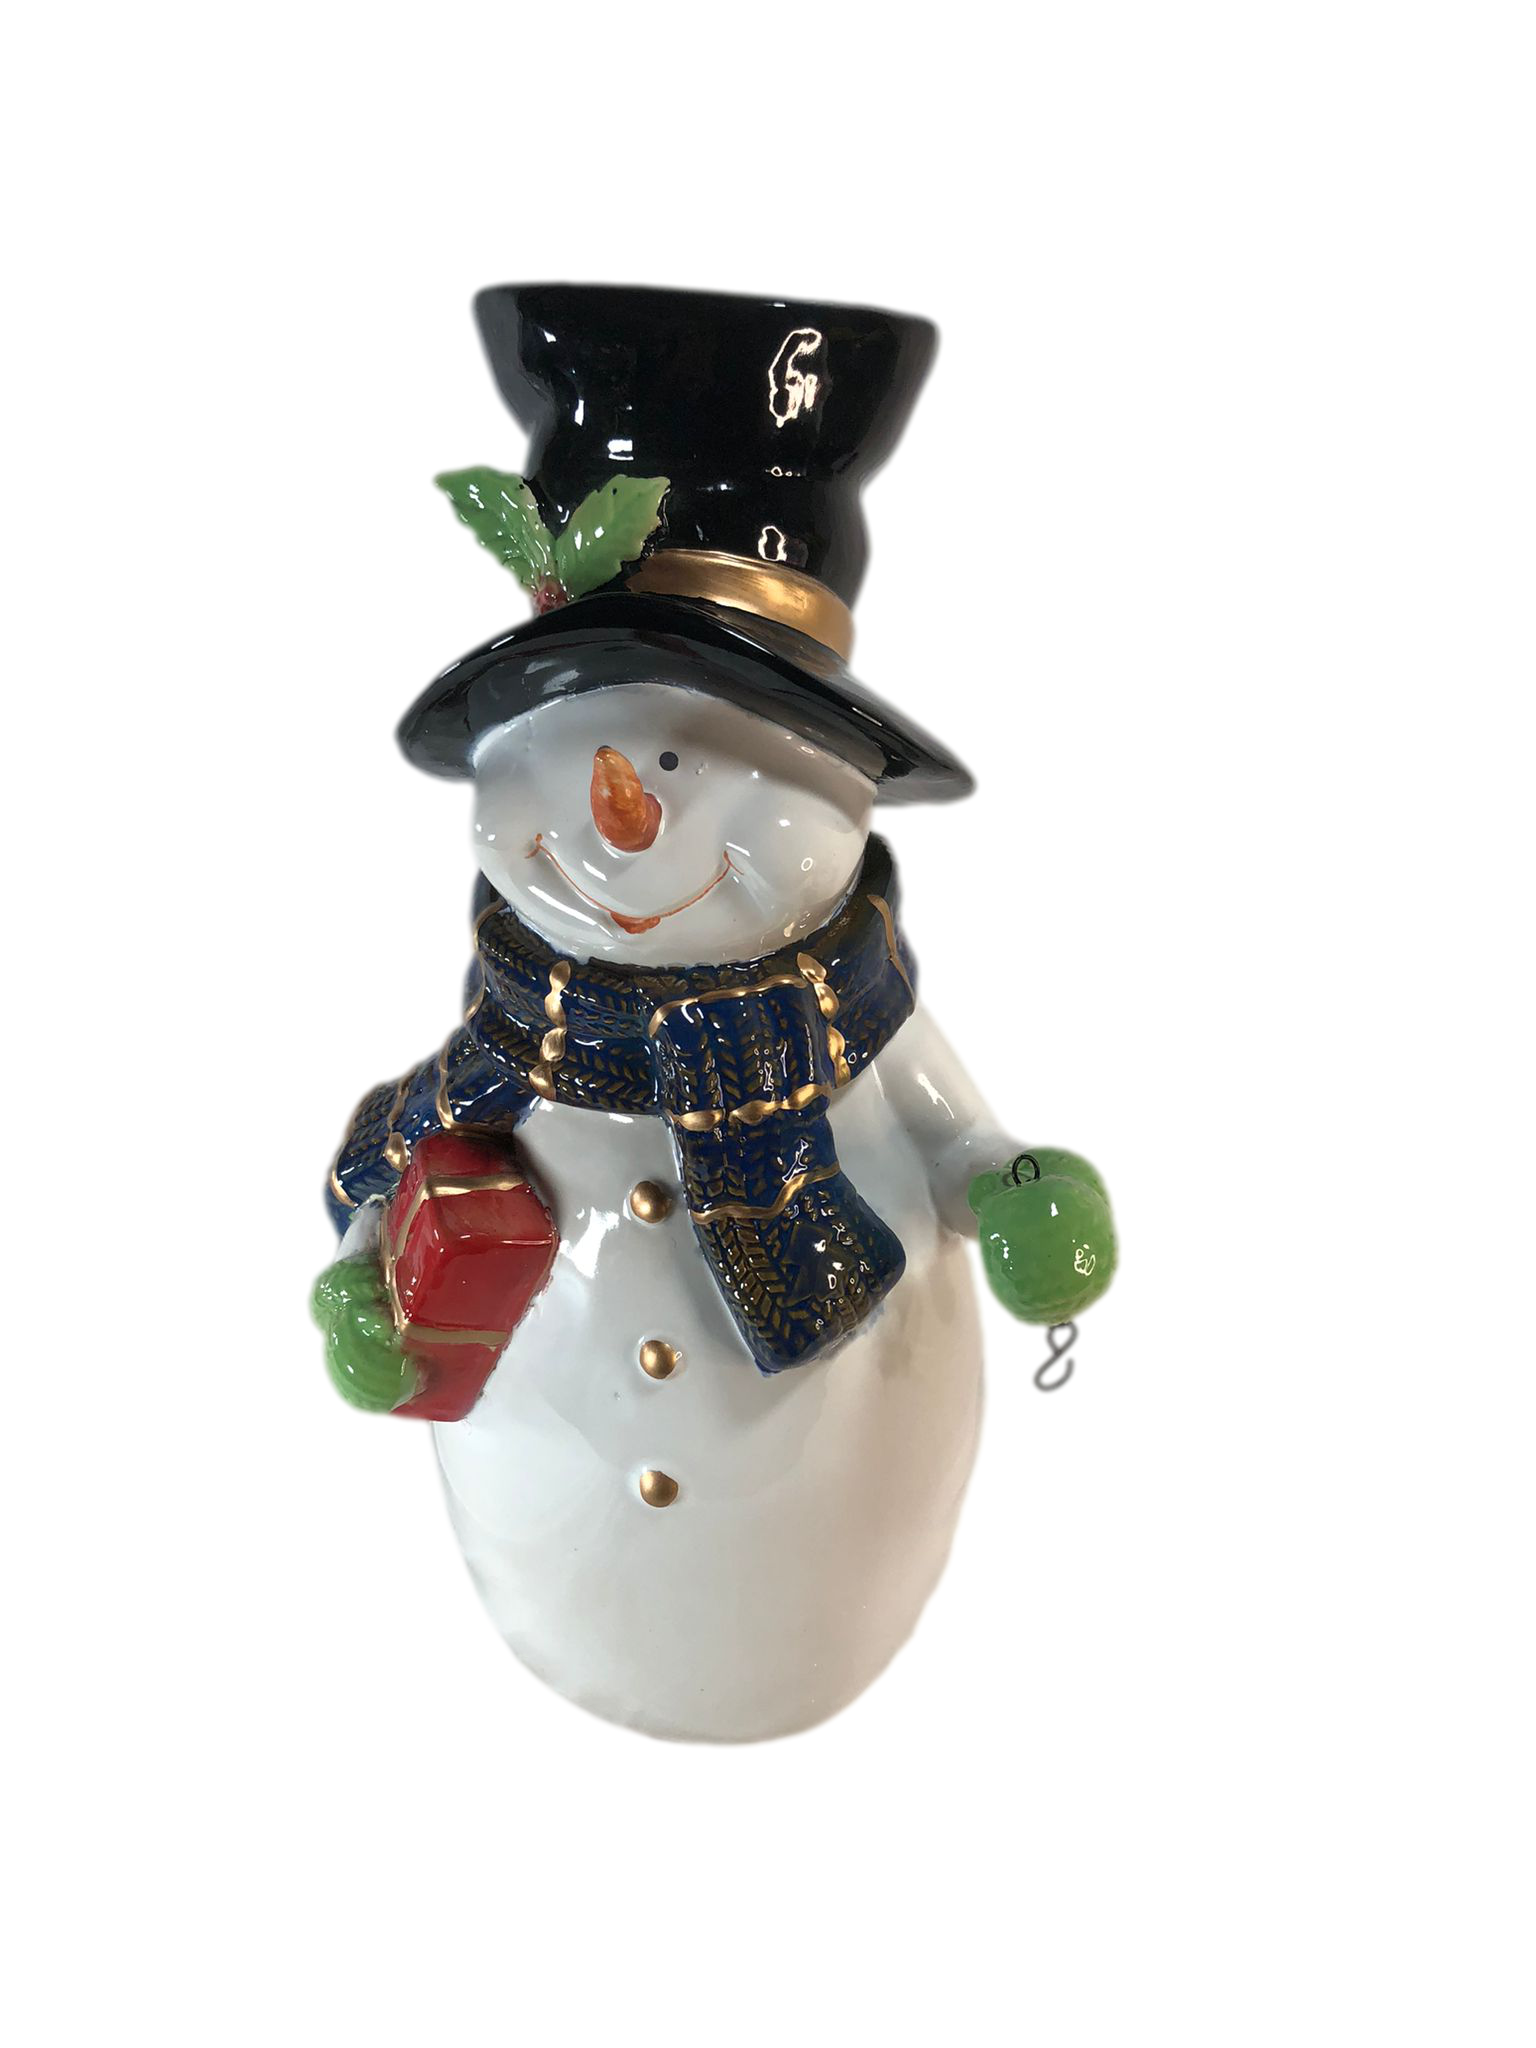 "As Is" Porcelain Holiday Figure w/ Illuminated Lantern